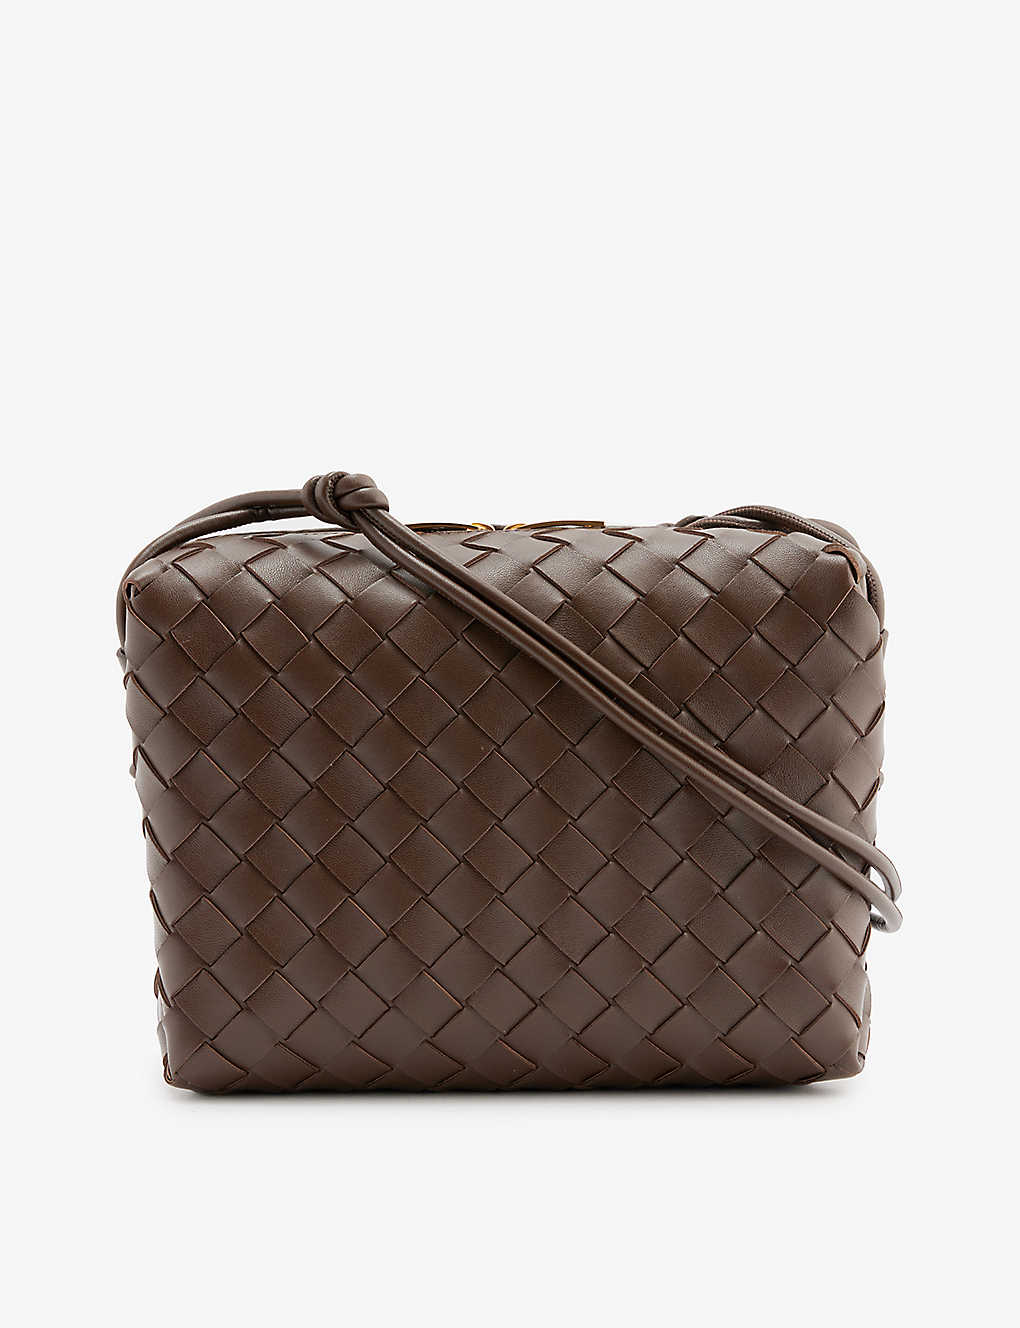 Bottega Veneta Loop Leather Cross-body Bag In Light Brown/gold